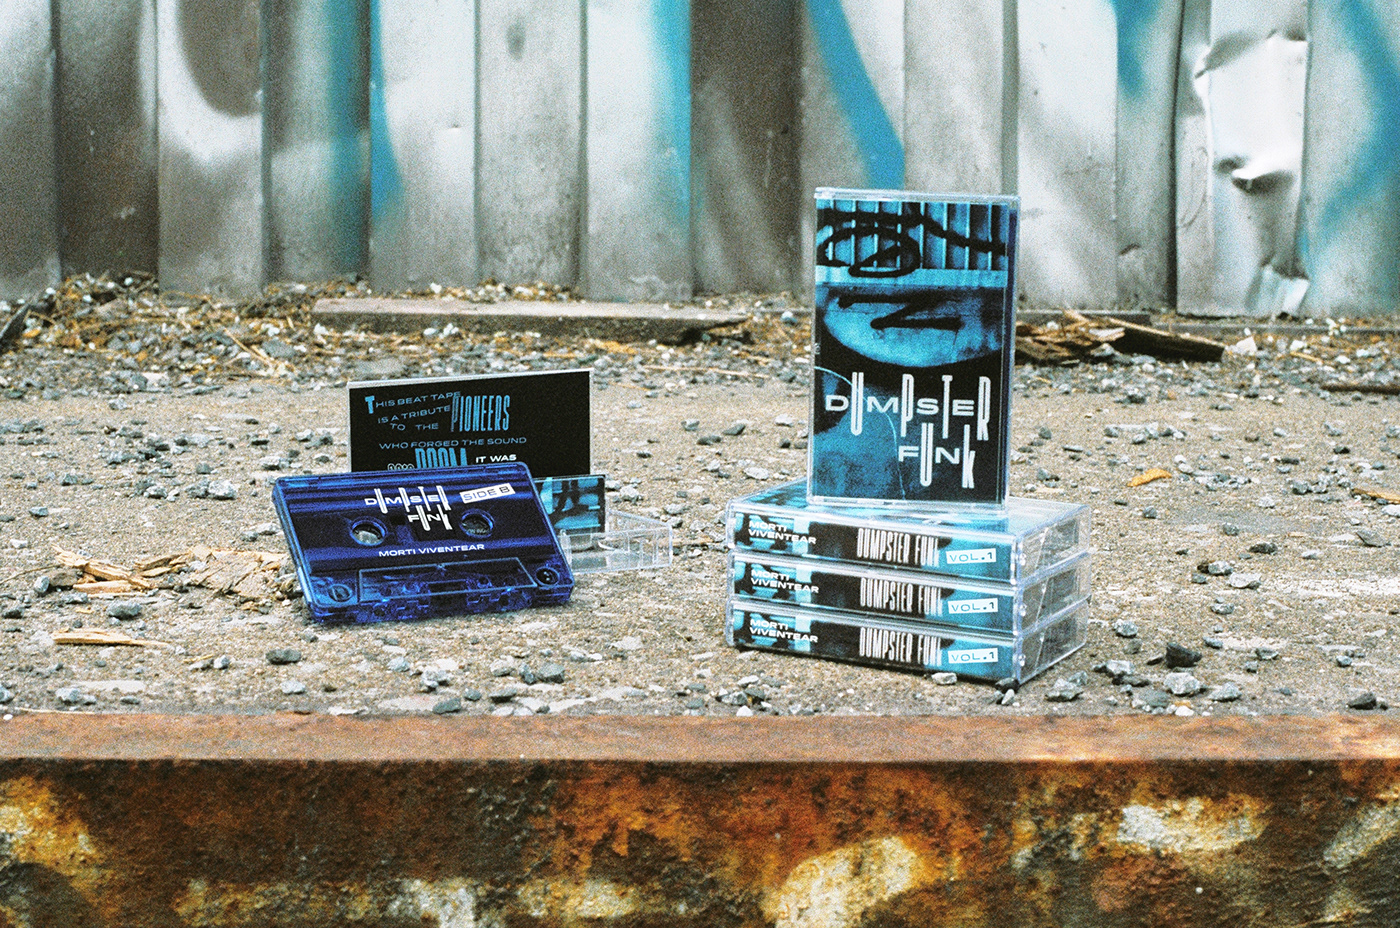 tape cassette album cover album artwork music typography   35mm Photography hip hop Graffiti cover design